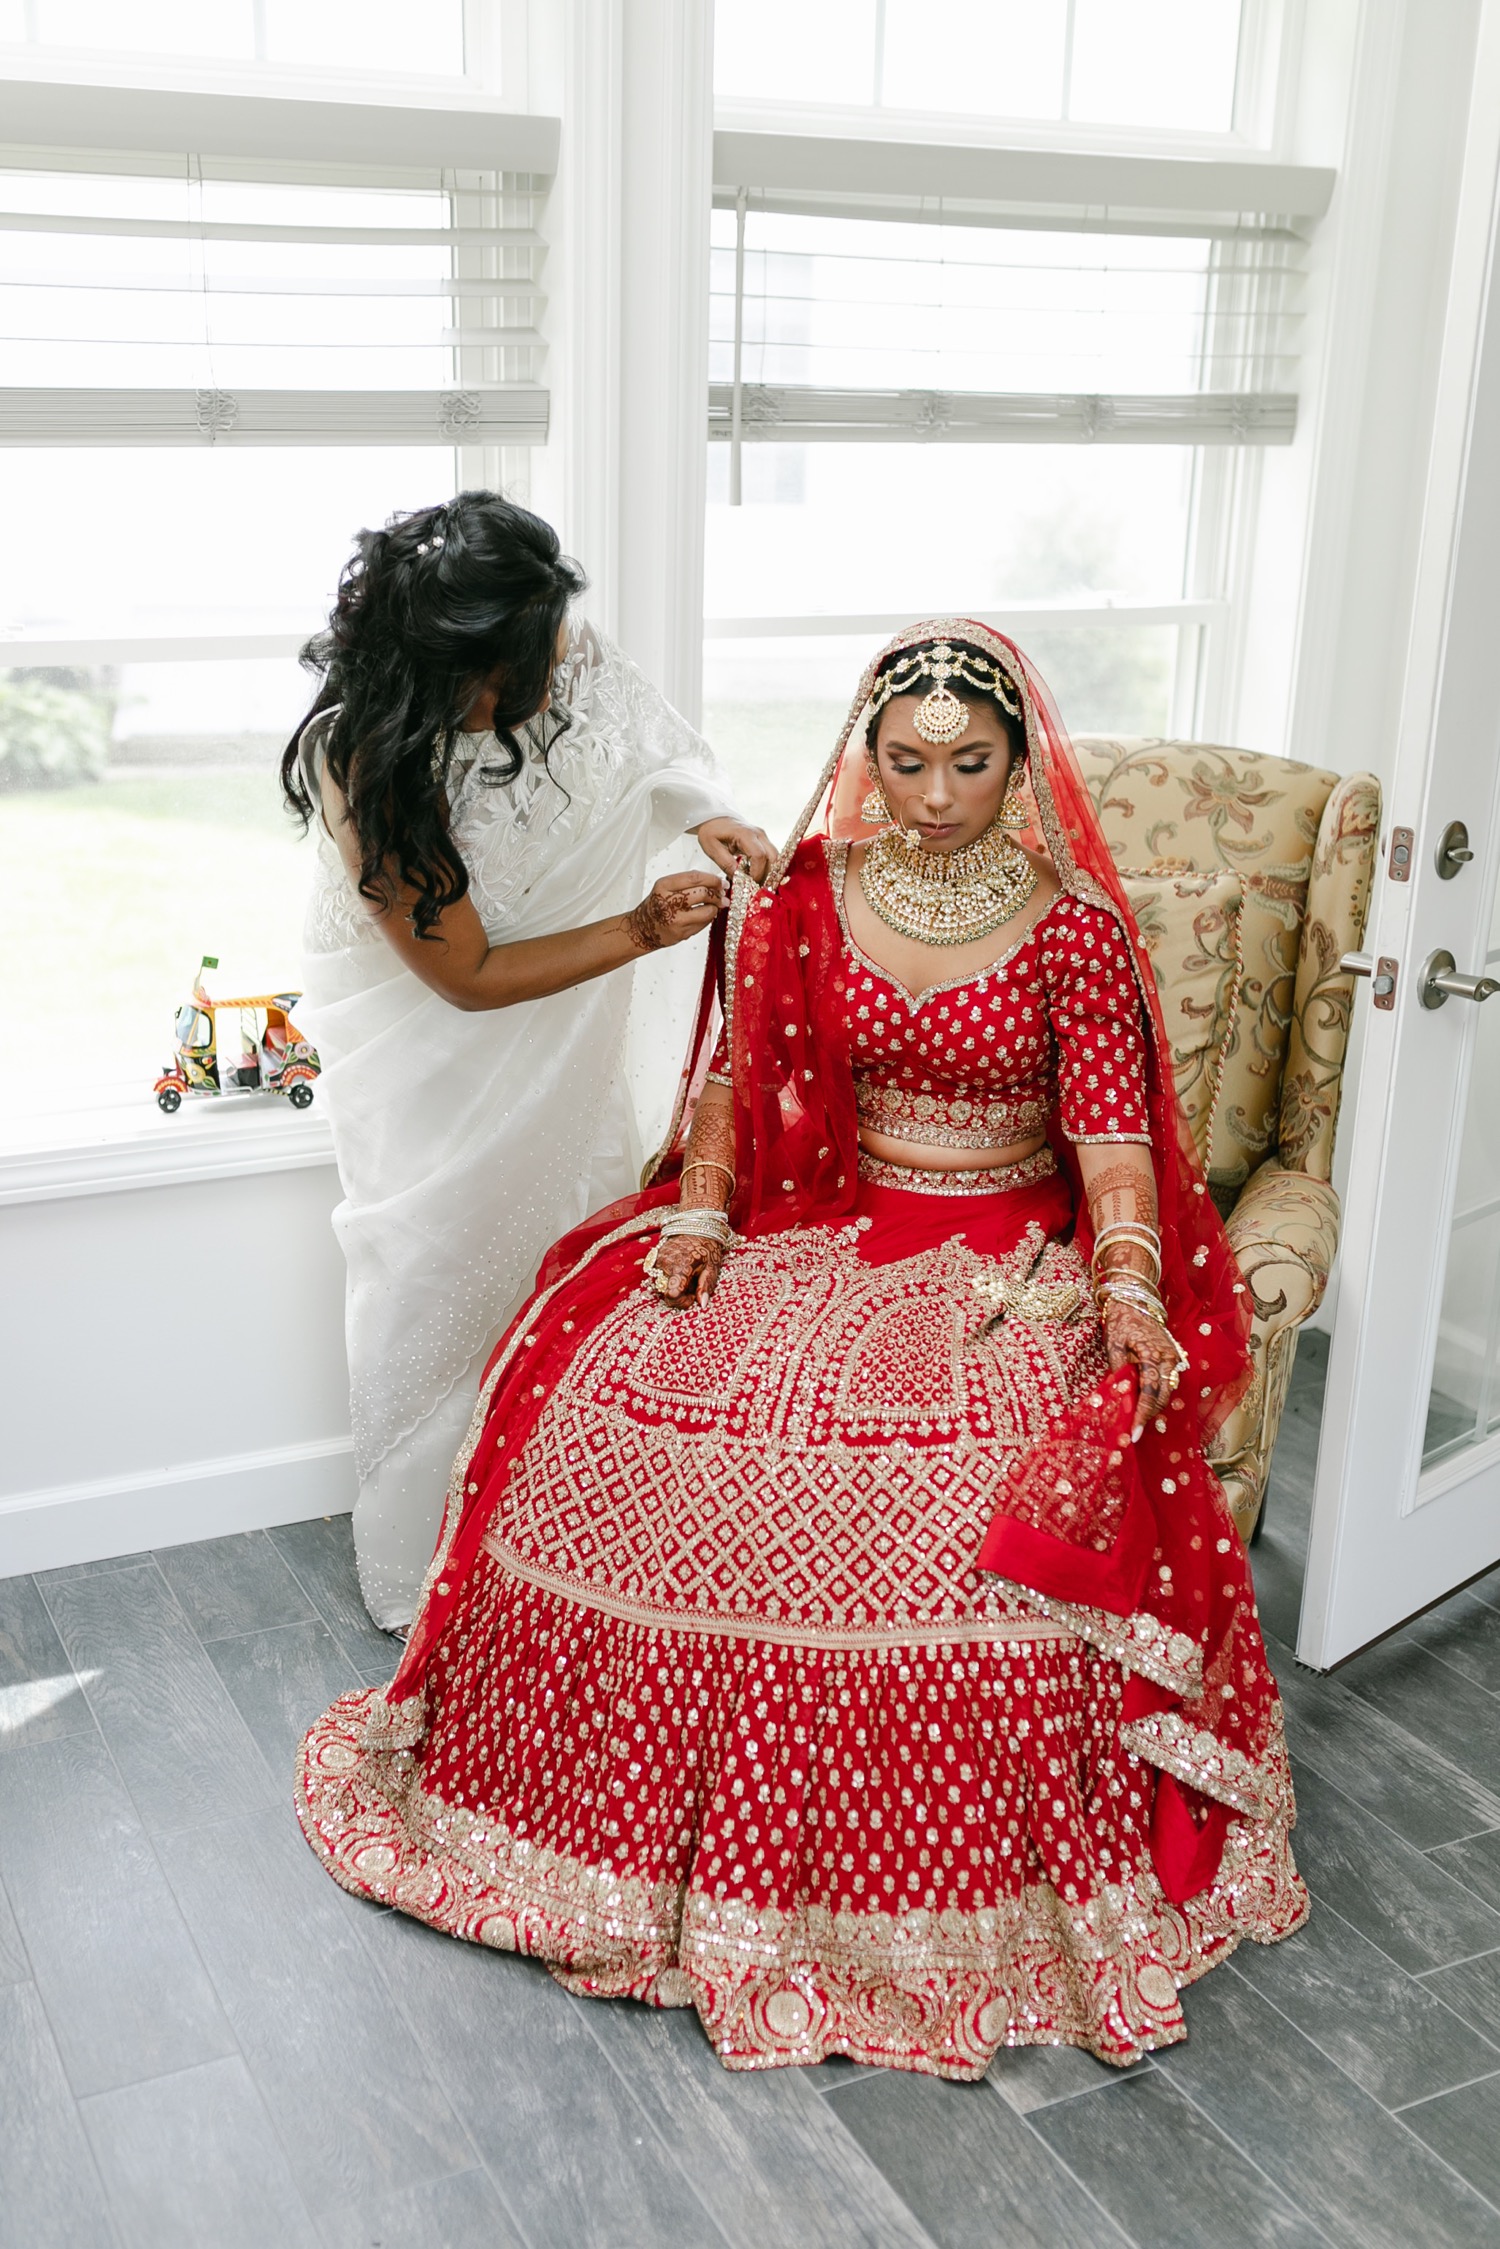 Bengali Wedding In Kolkata Where The Bride Designed Her Wedding Attire | Bengali  wedding, Wedding attire, Bridal makeover